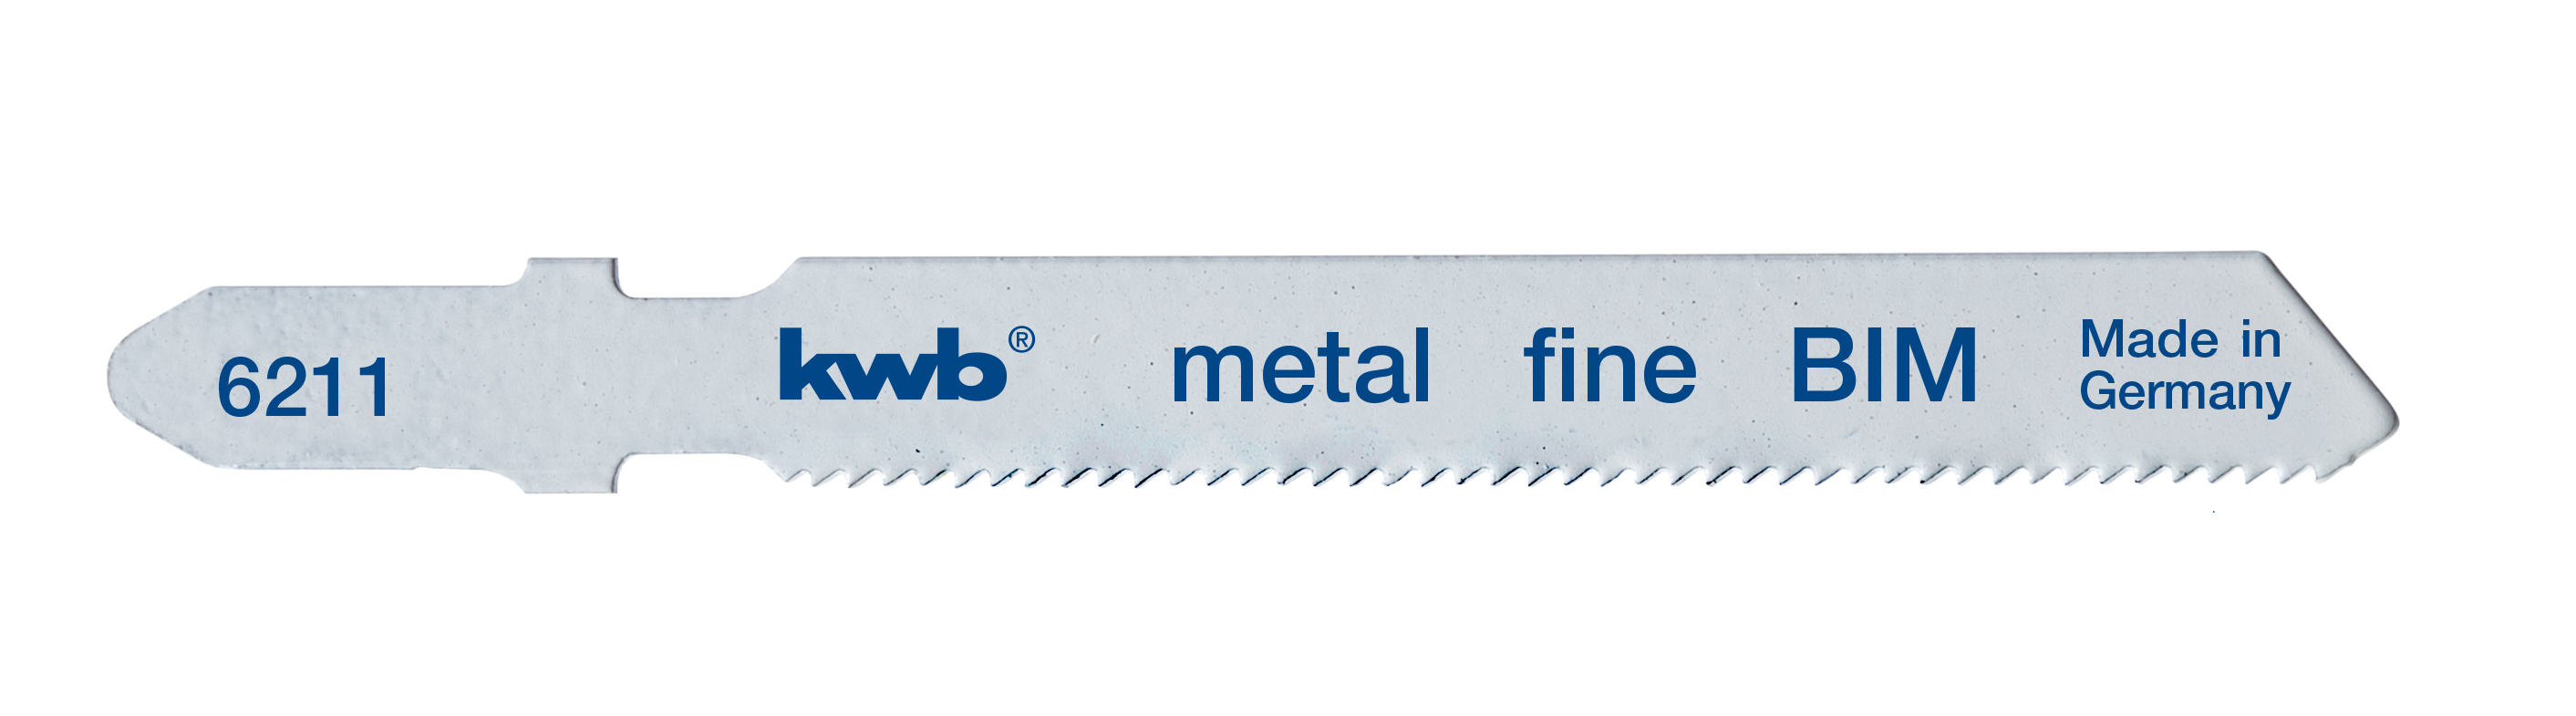 KWB BURMEISTER Stichsägeblätter BiM Metall fein 77 mm (5 Stück) kwb Premium